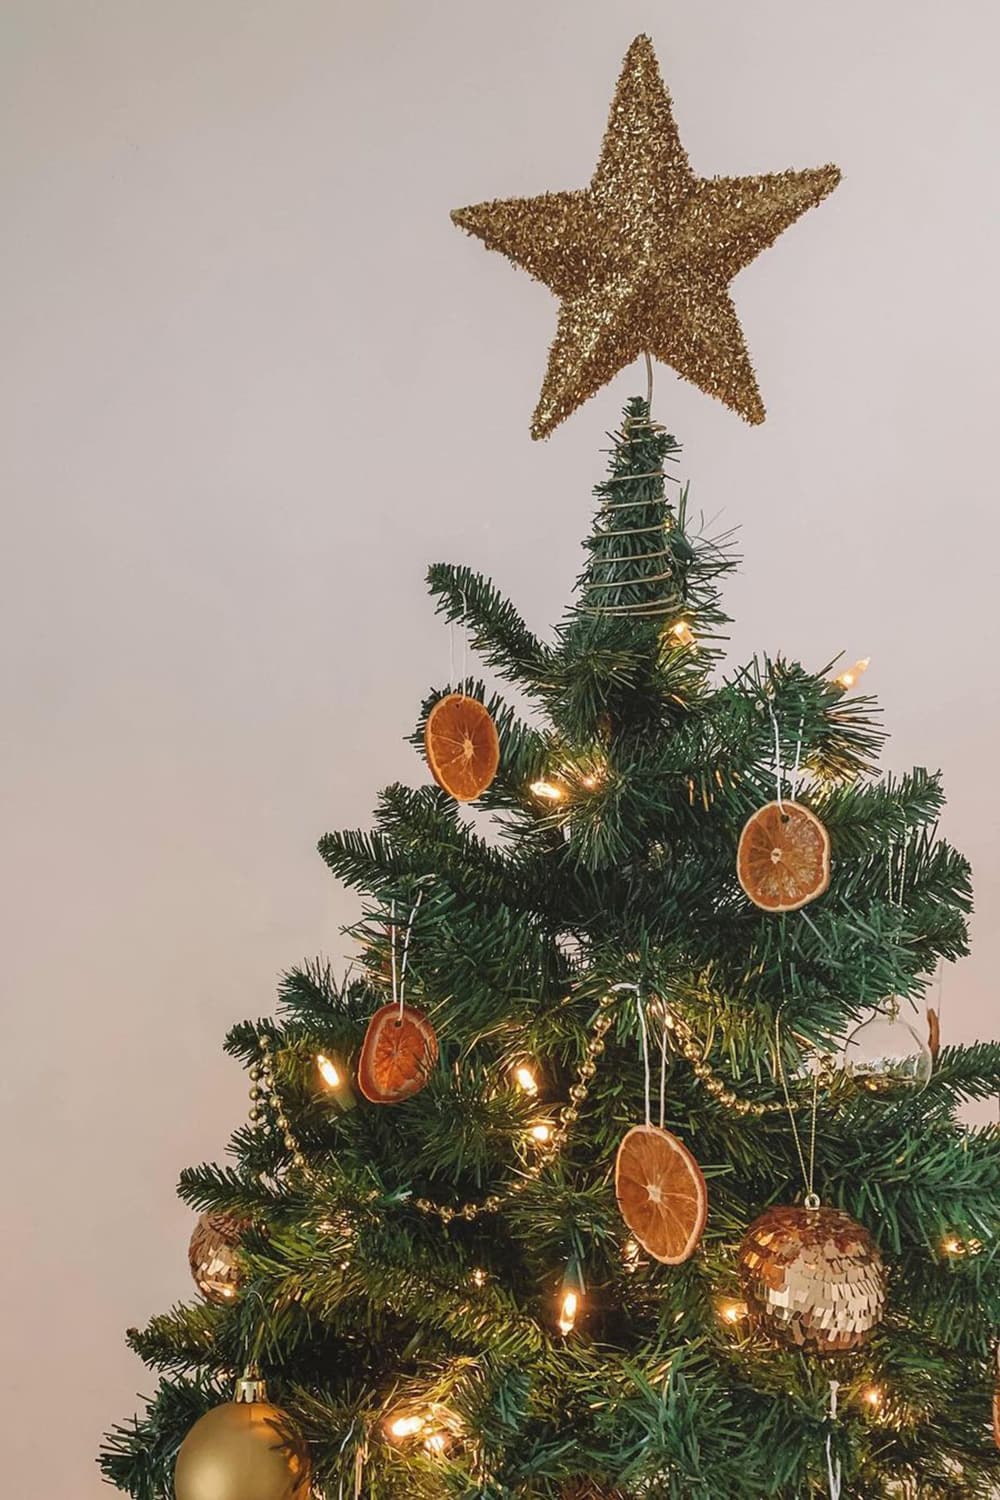 Dried orange Christmas tree ornaments